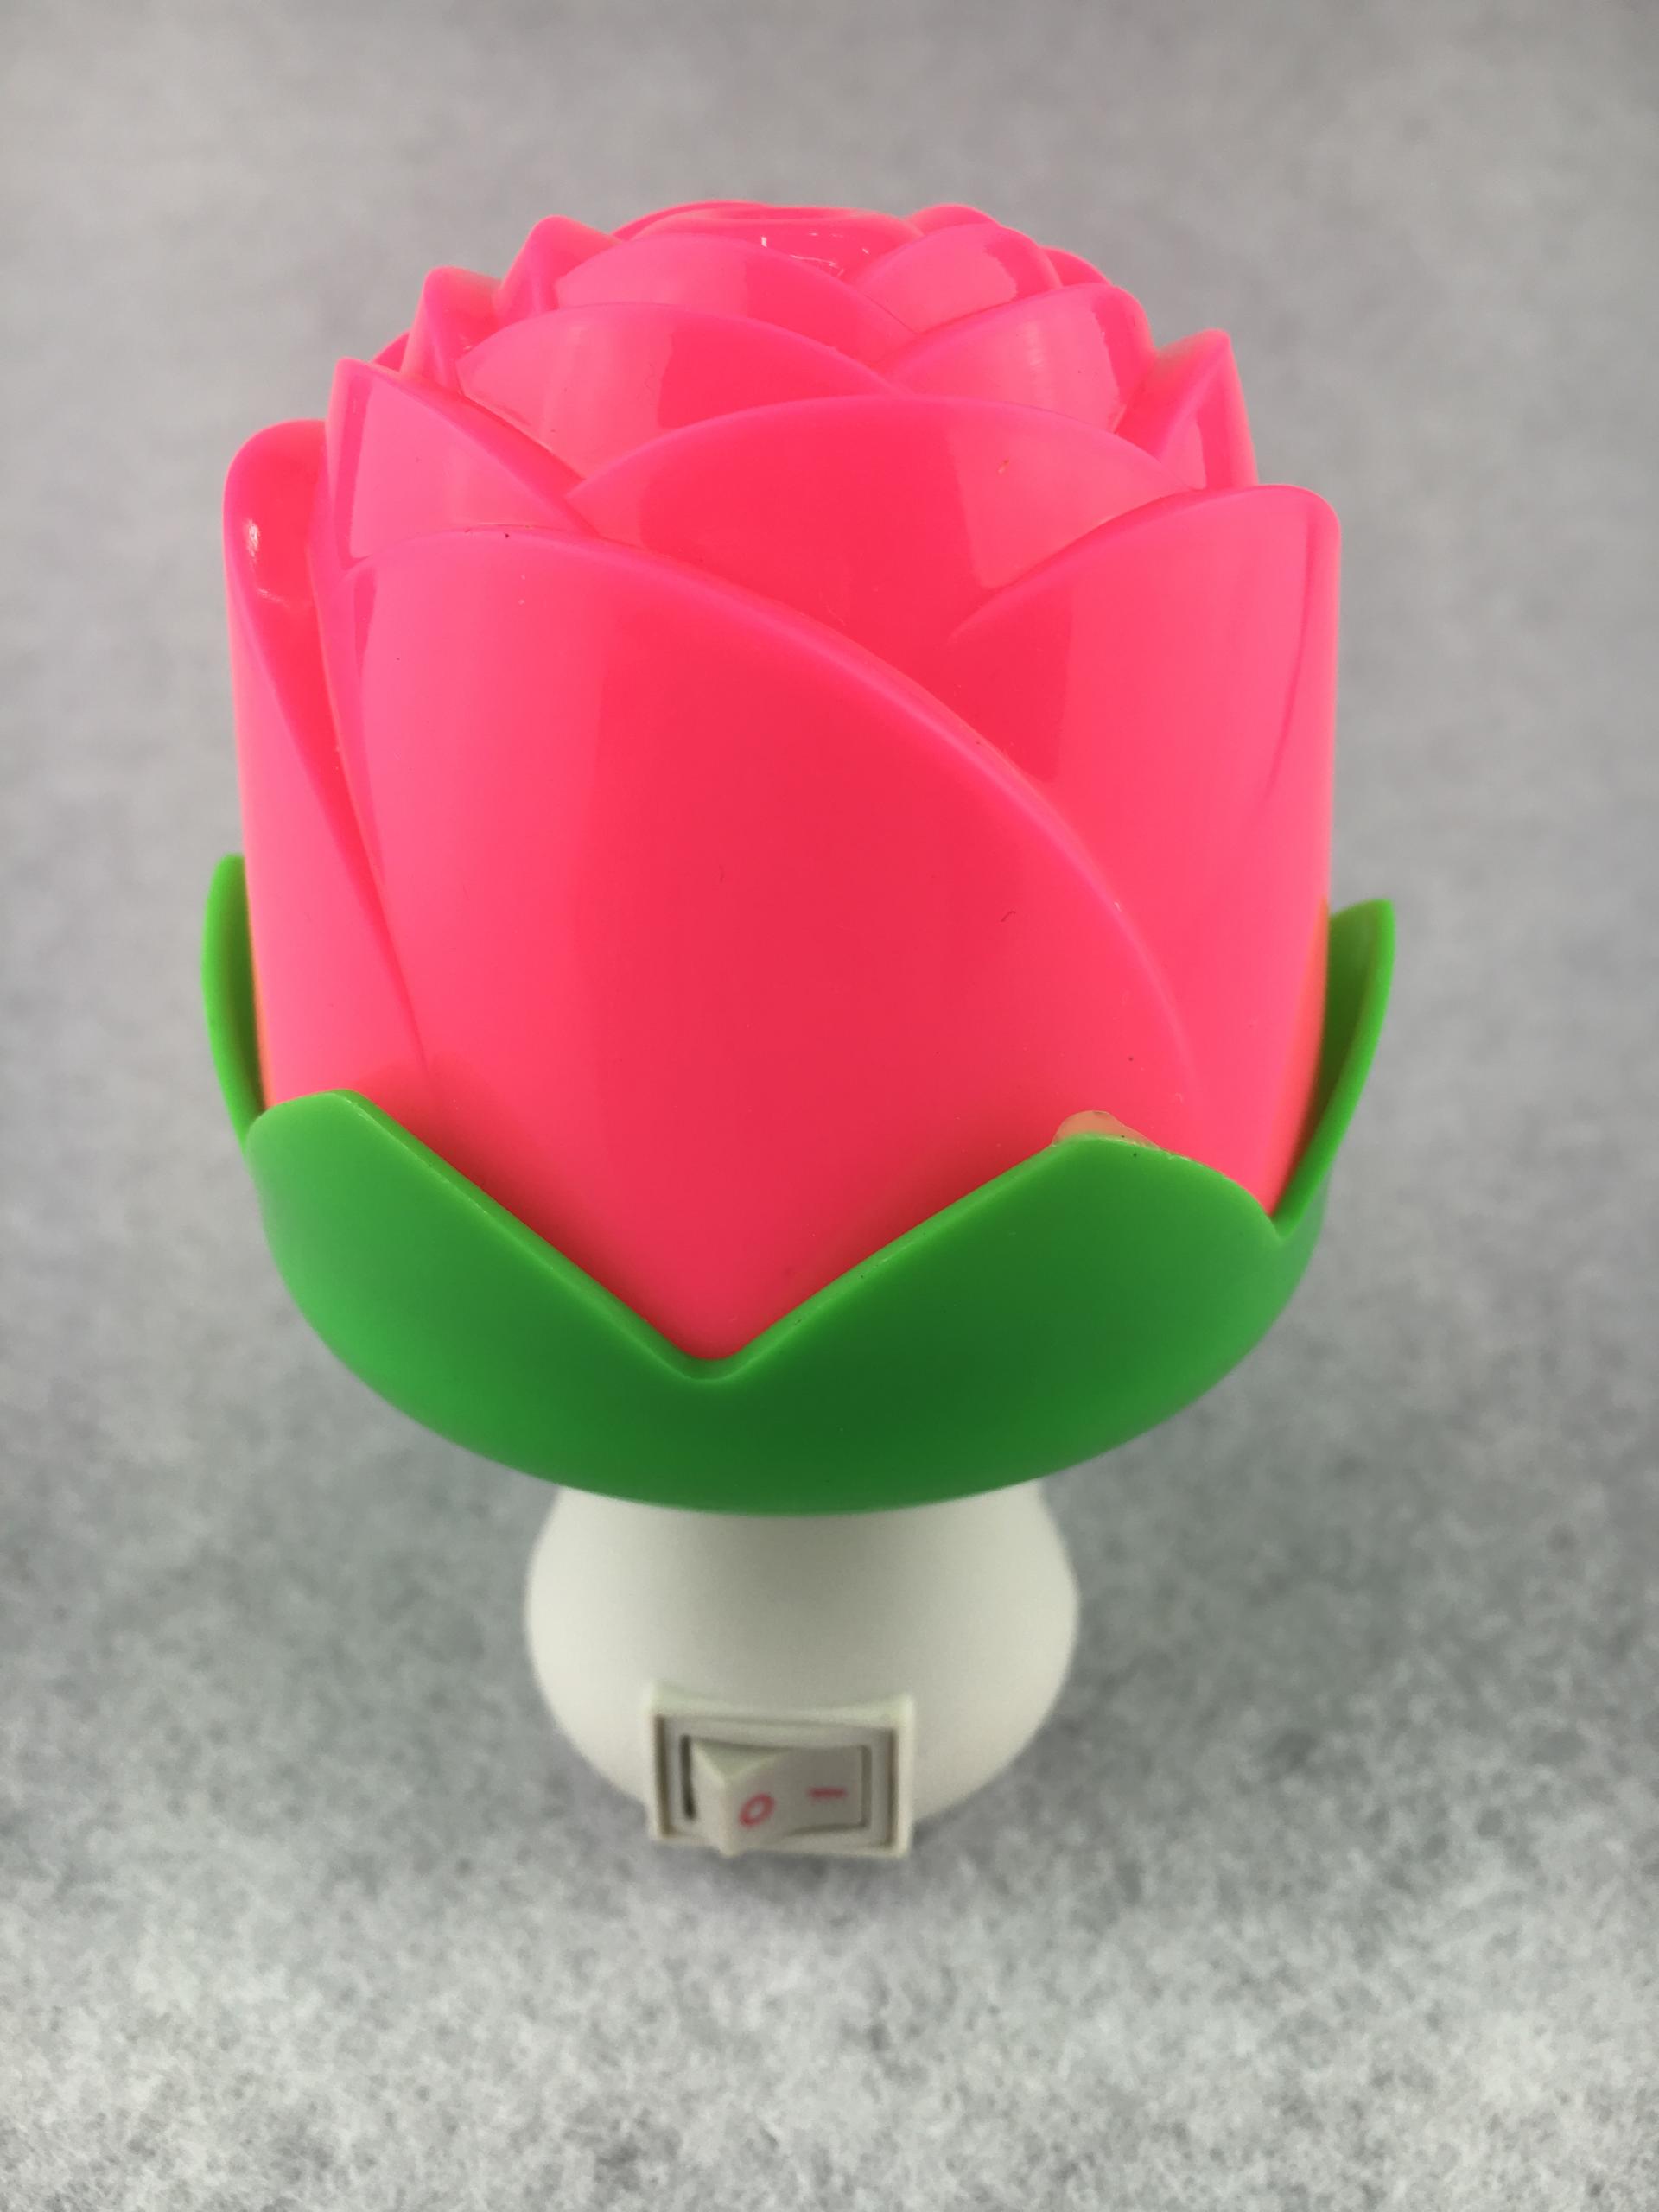 OEM 0.6W AC 110V or 220V W042 Flower rose shape 3 SMD mini switch sensor plug in night light